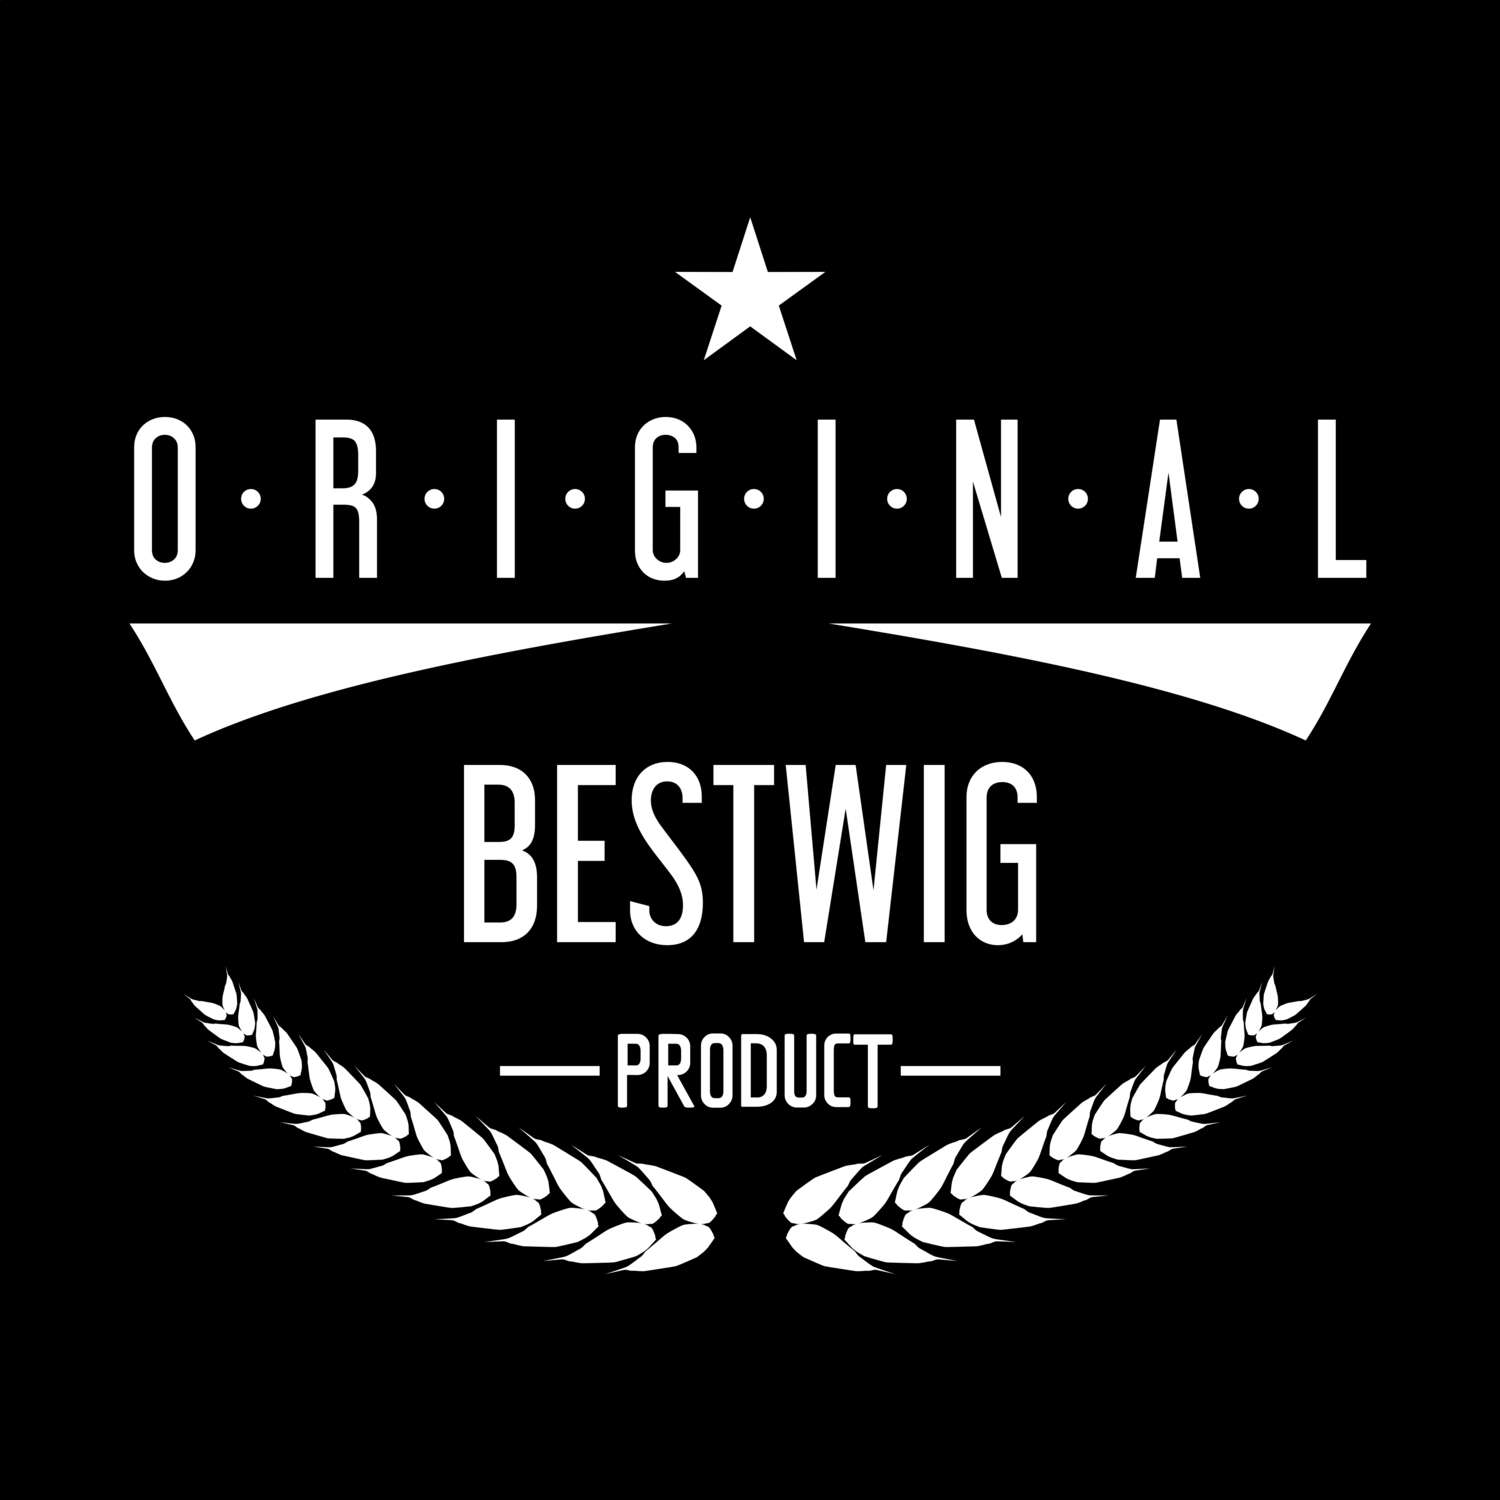 Bestwig T-Shirt »Original Product«